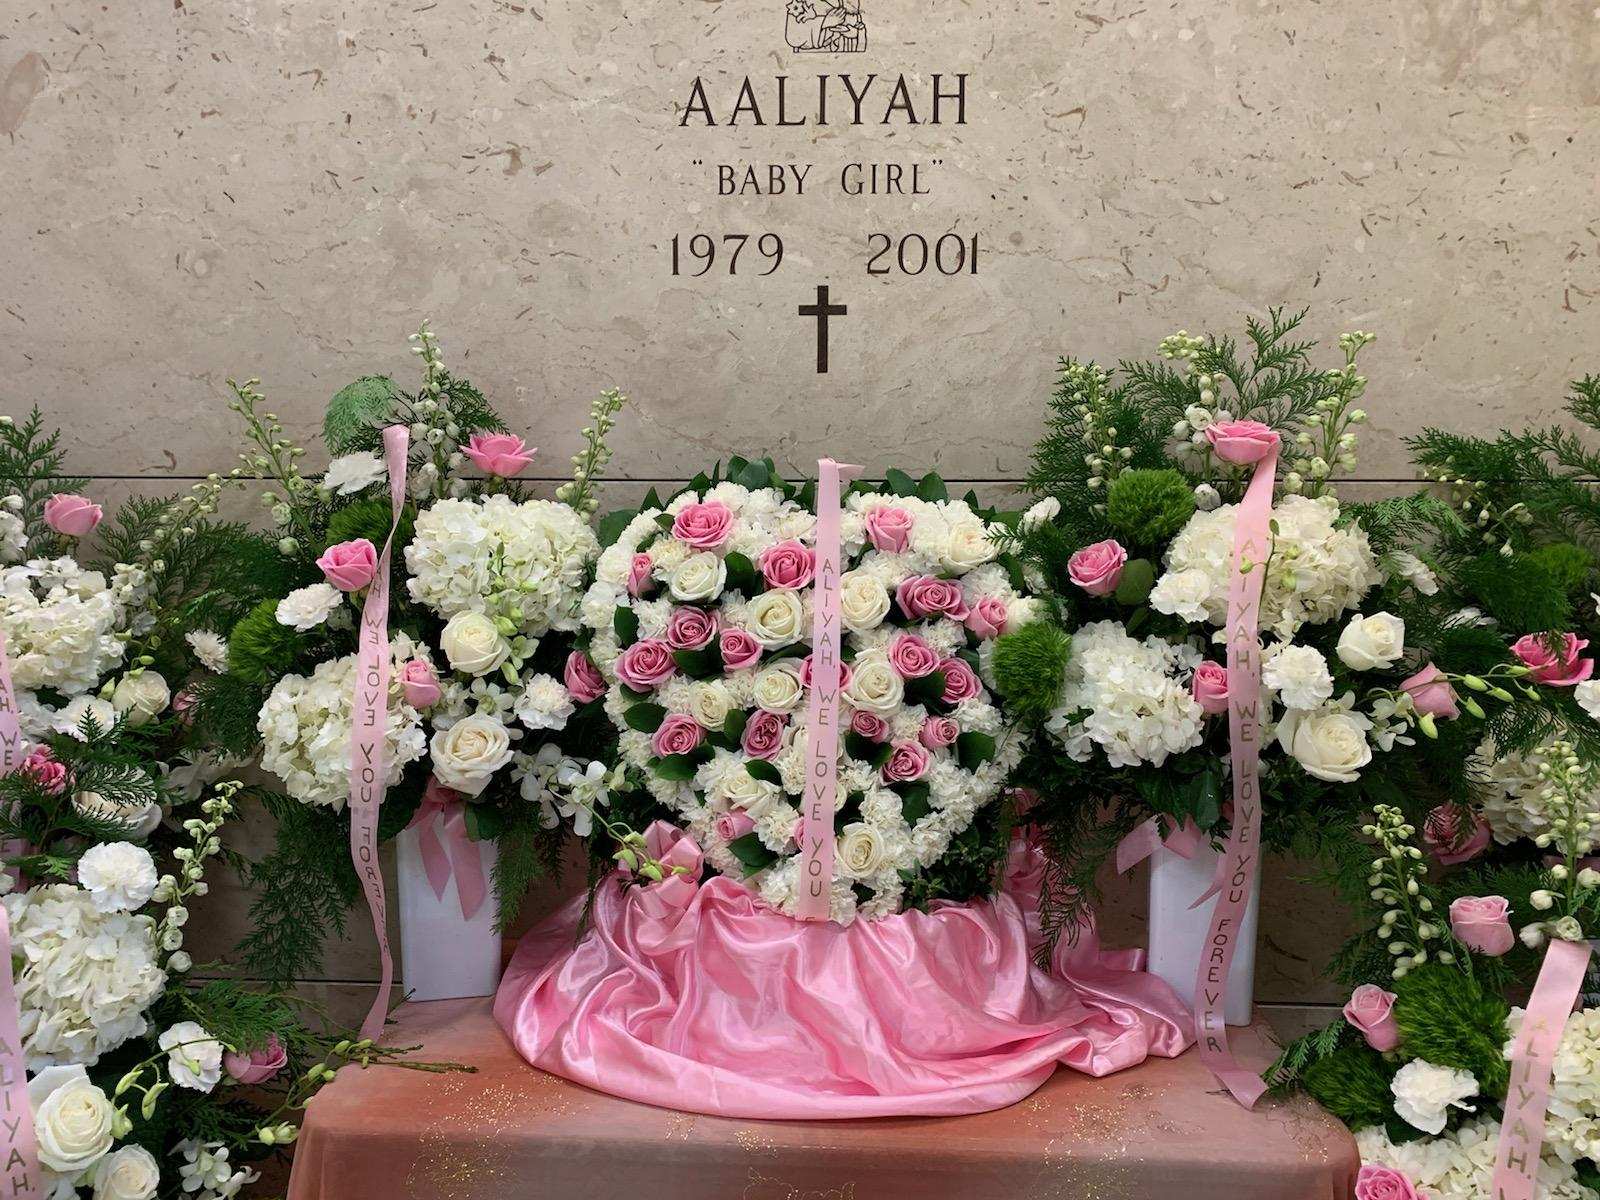 Happy Birthday Aaliyah, We Love You Forever!